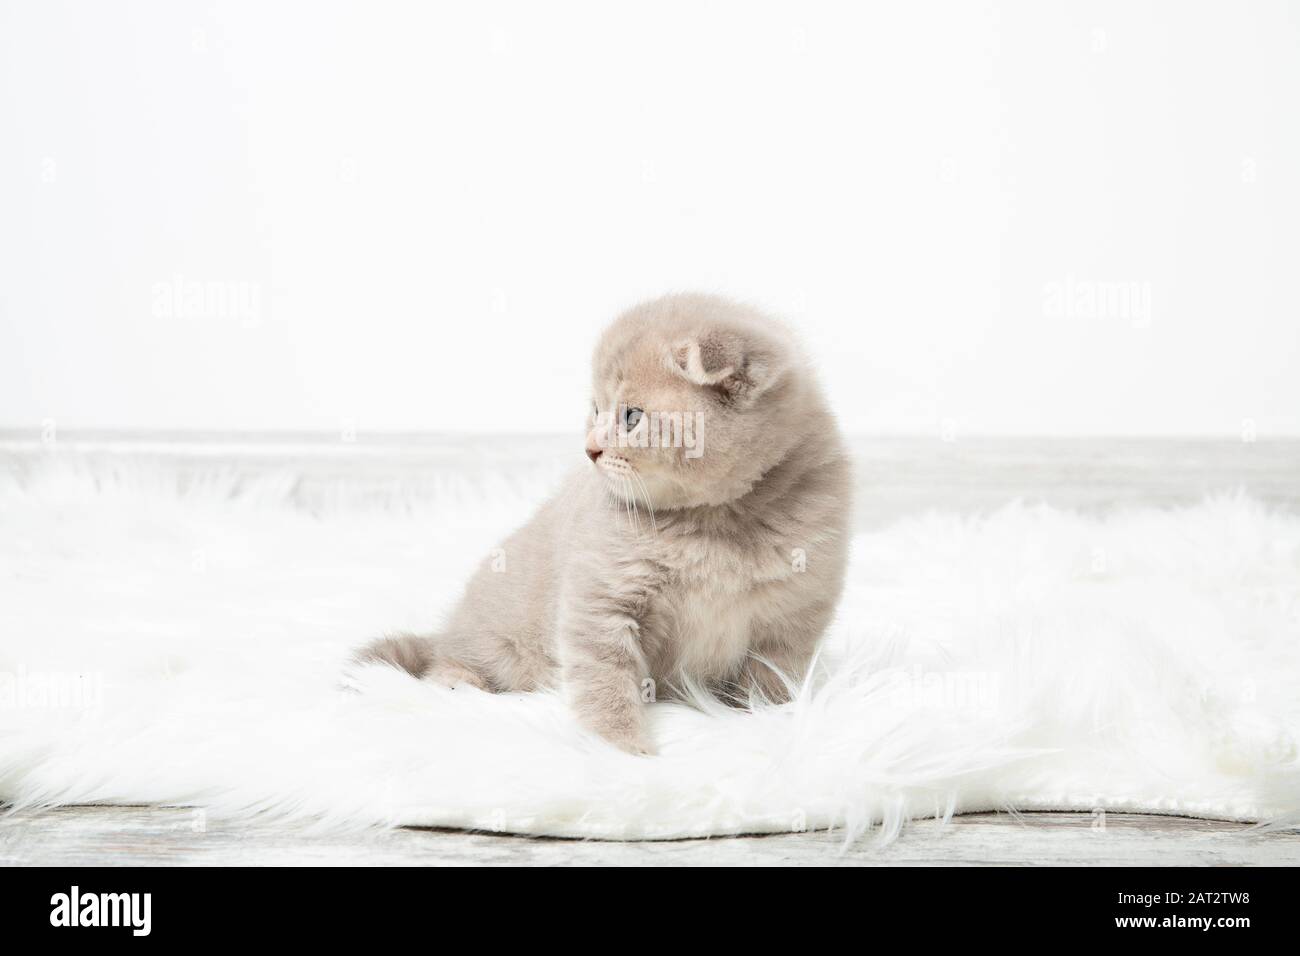 A little red kitten sits in a room on a fluffy white carpet. The kitten looks away. Beautiful kitten Stock Photo